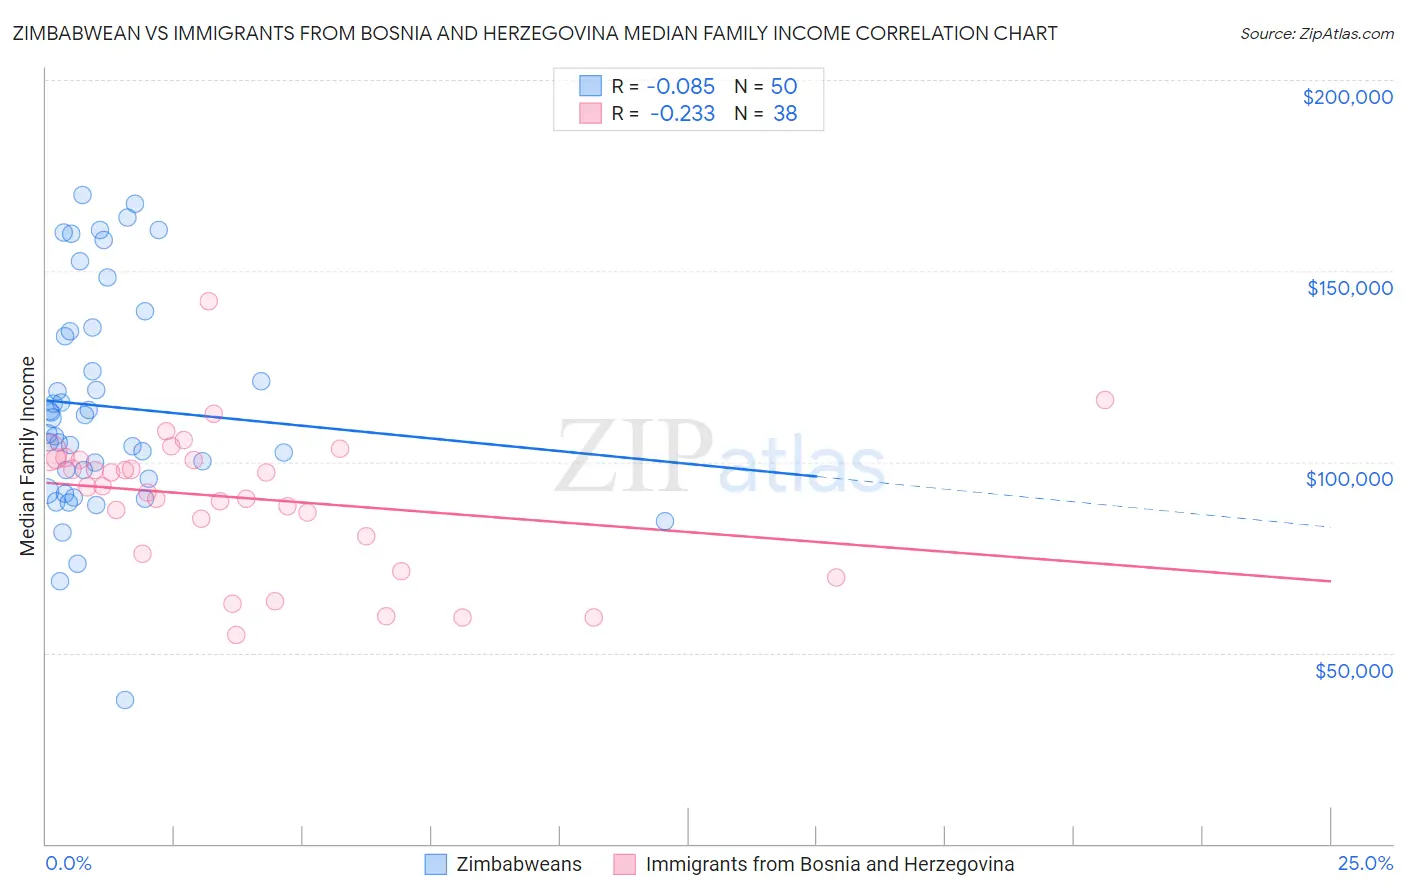 Zimbabwean vs Immigrants from Bosnia and Herzegovina Median Family Income